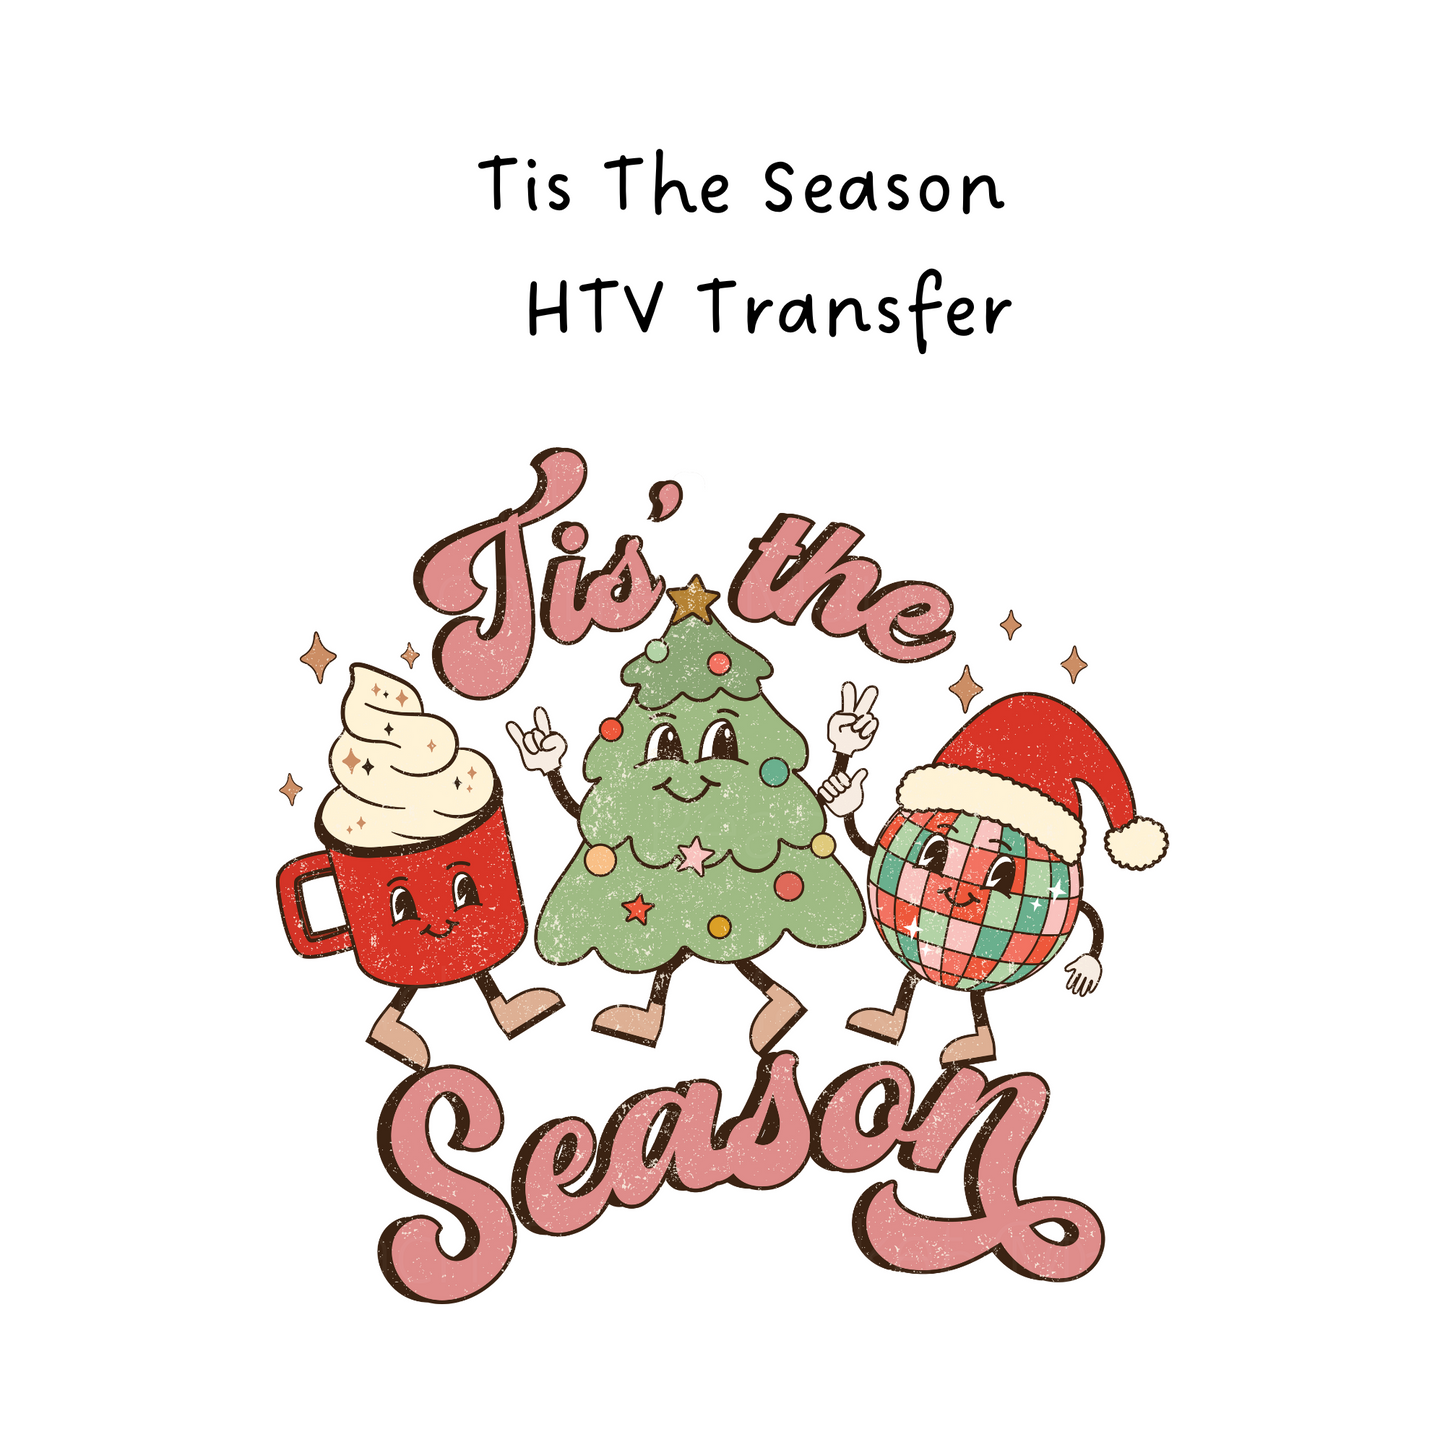 Tis The Season HTV Transfer